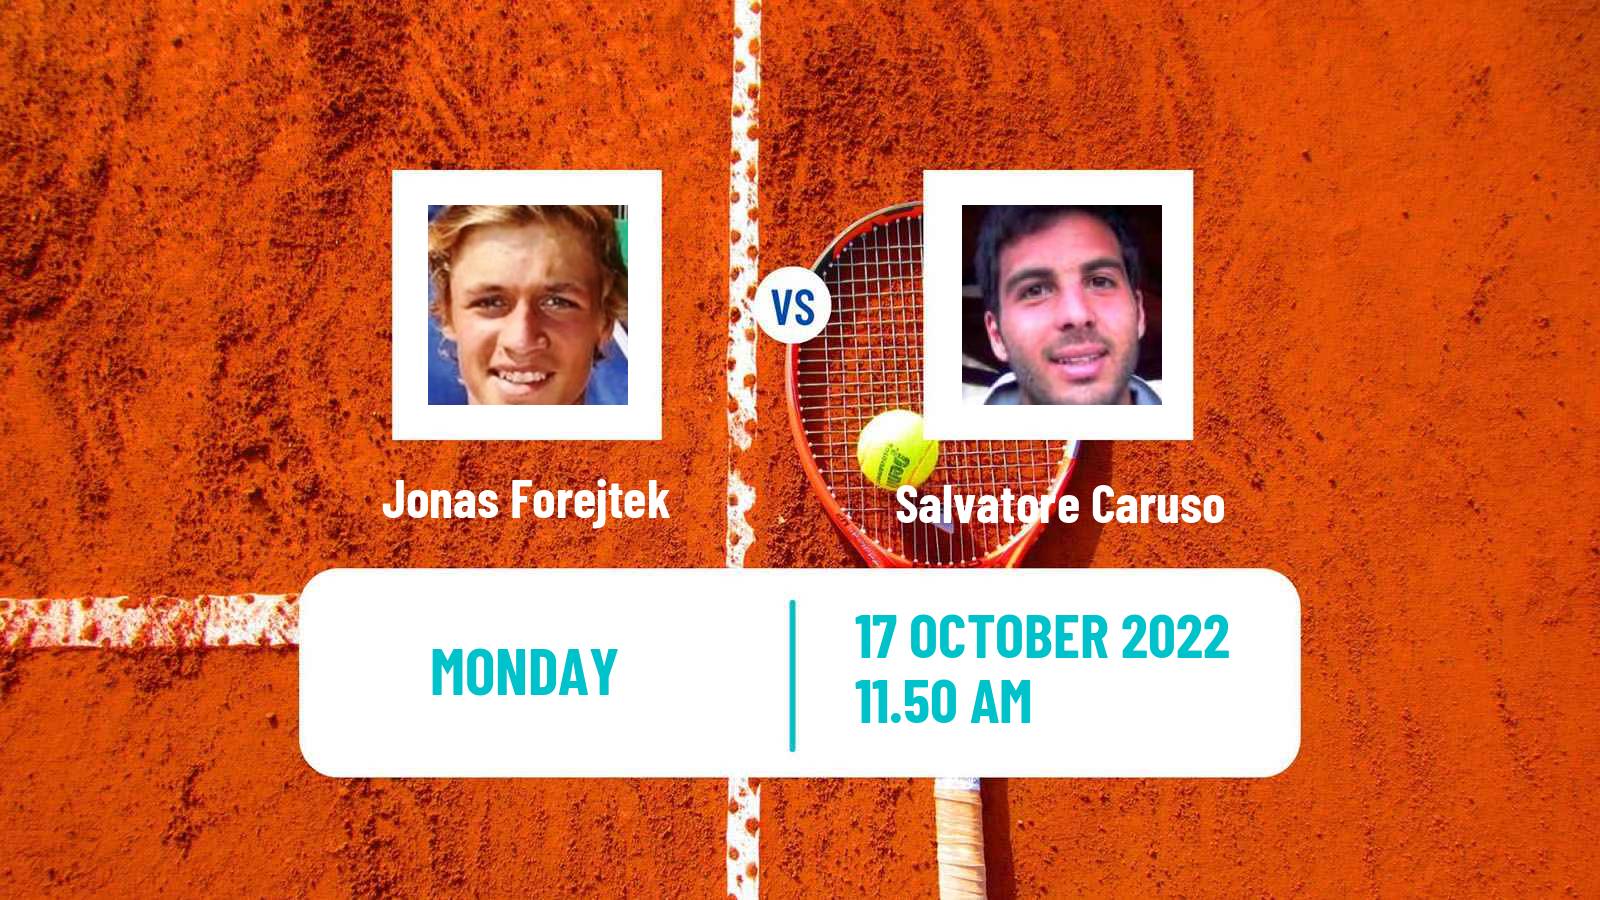 Tennis ATP Challenger Jonas Forejtek - Salvatore Caruso